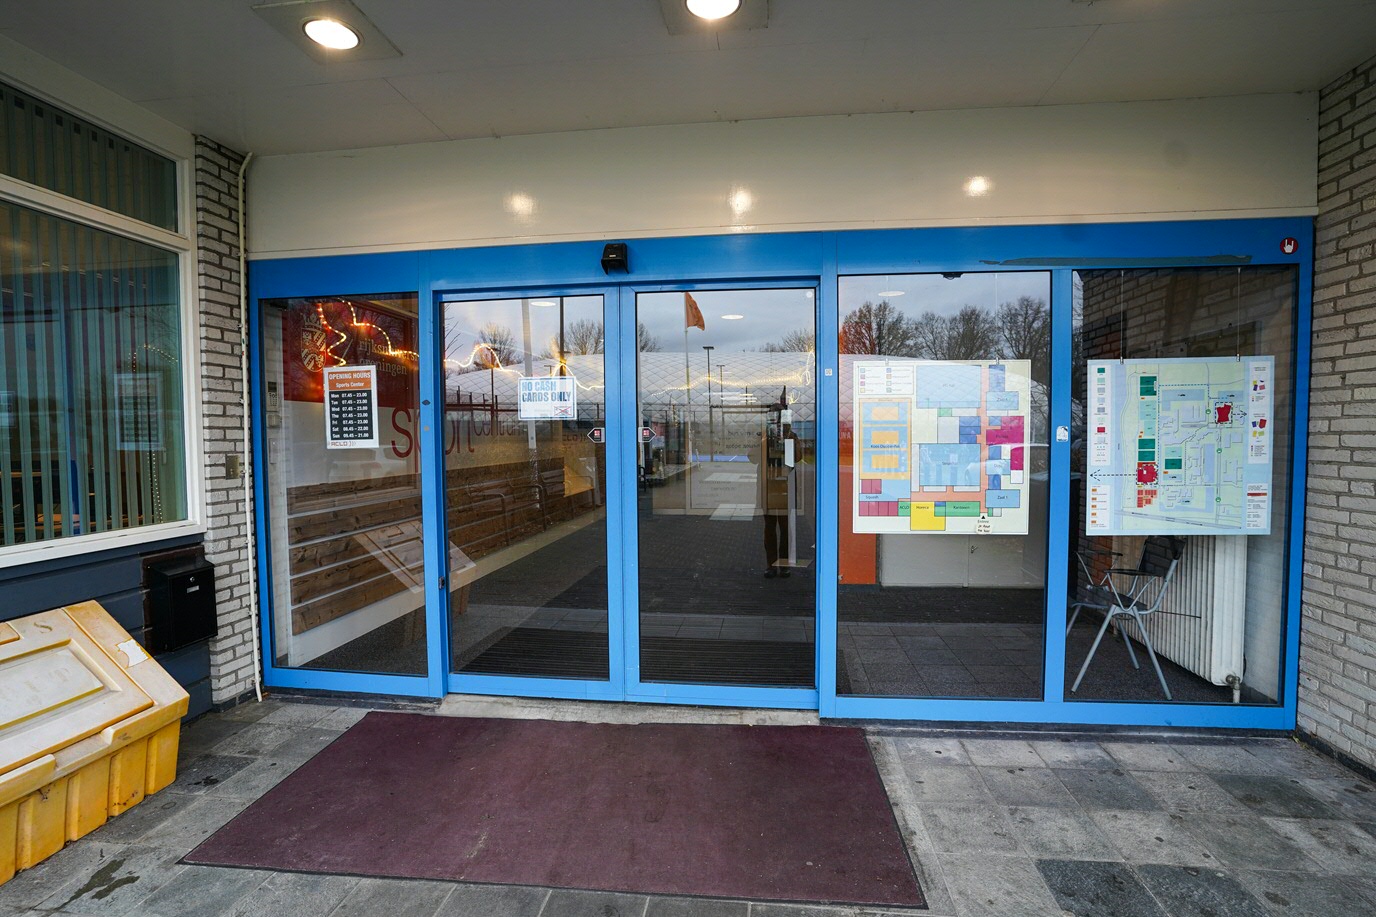 Main entrance to the venue, automatic sliding doors